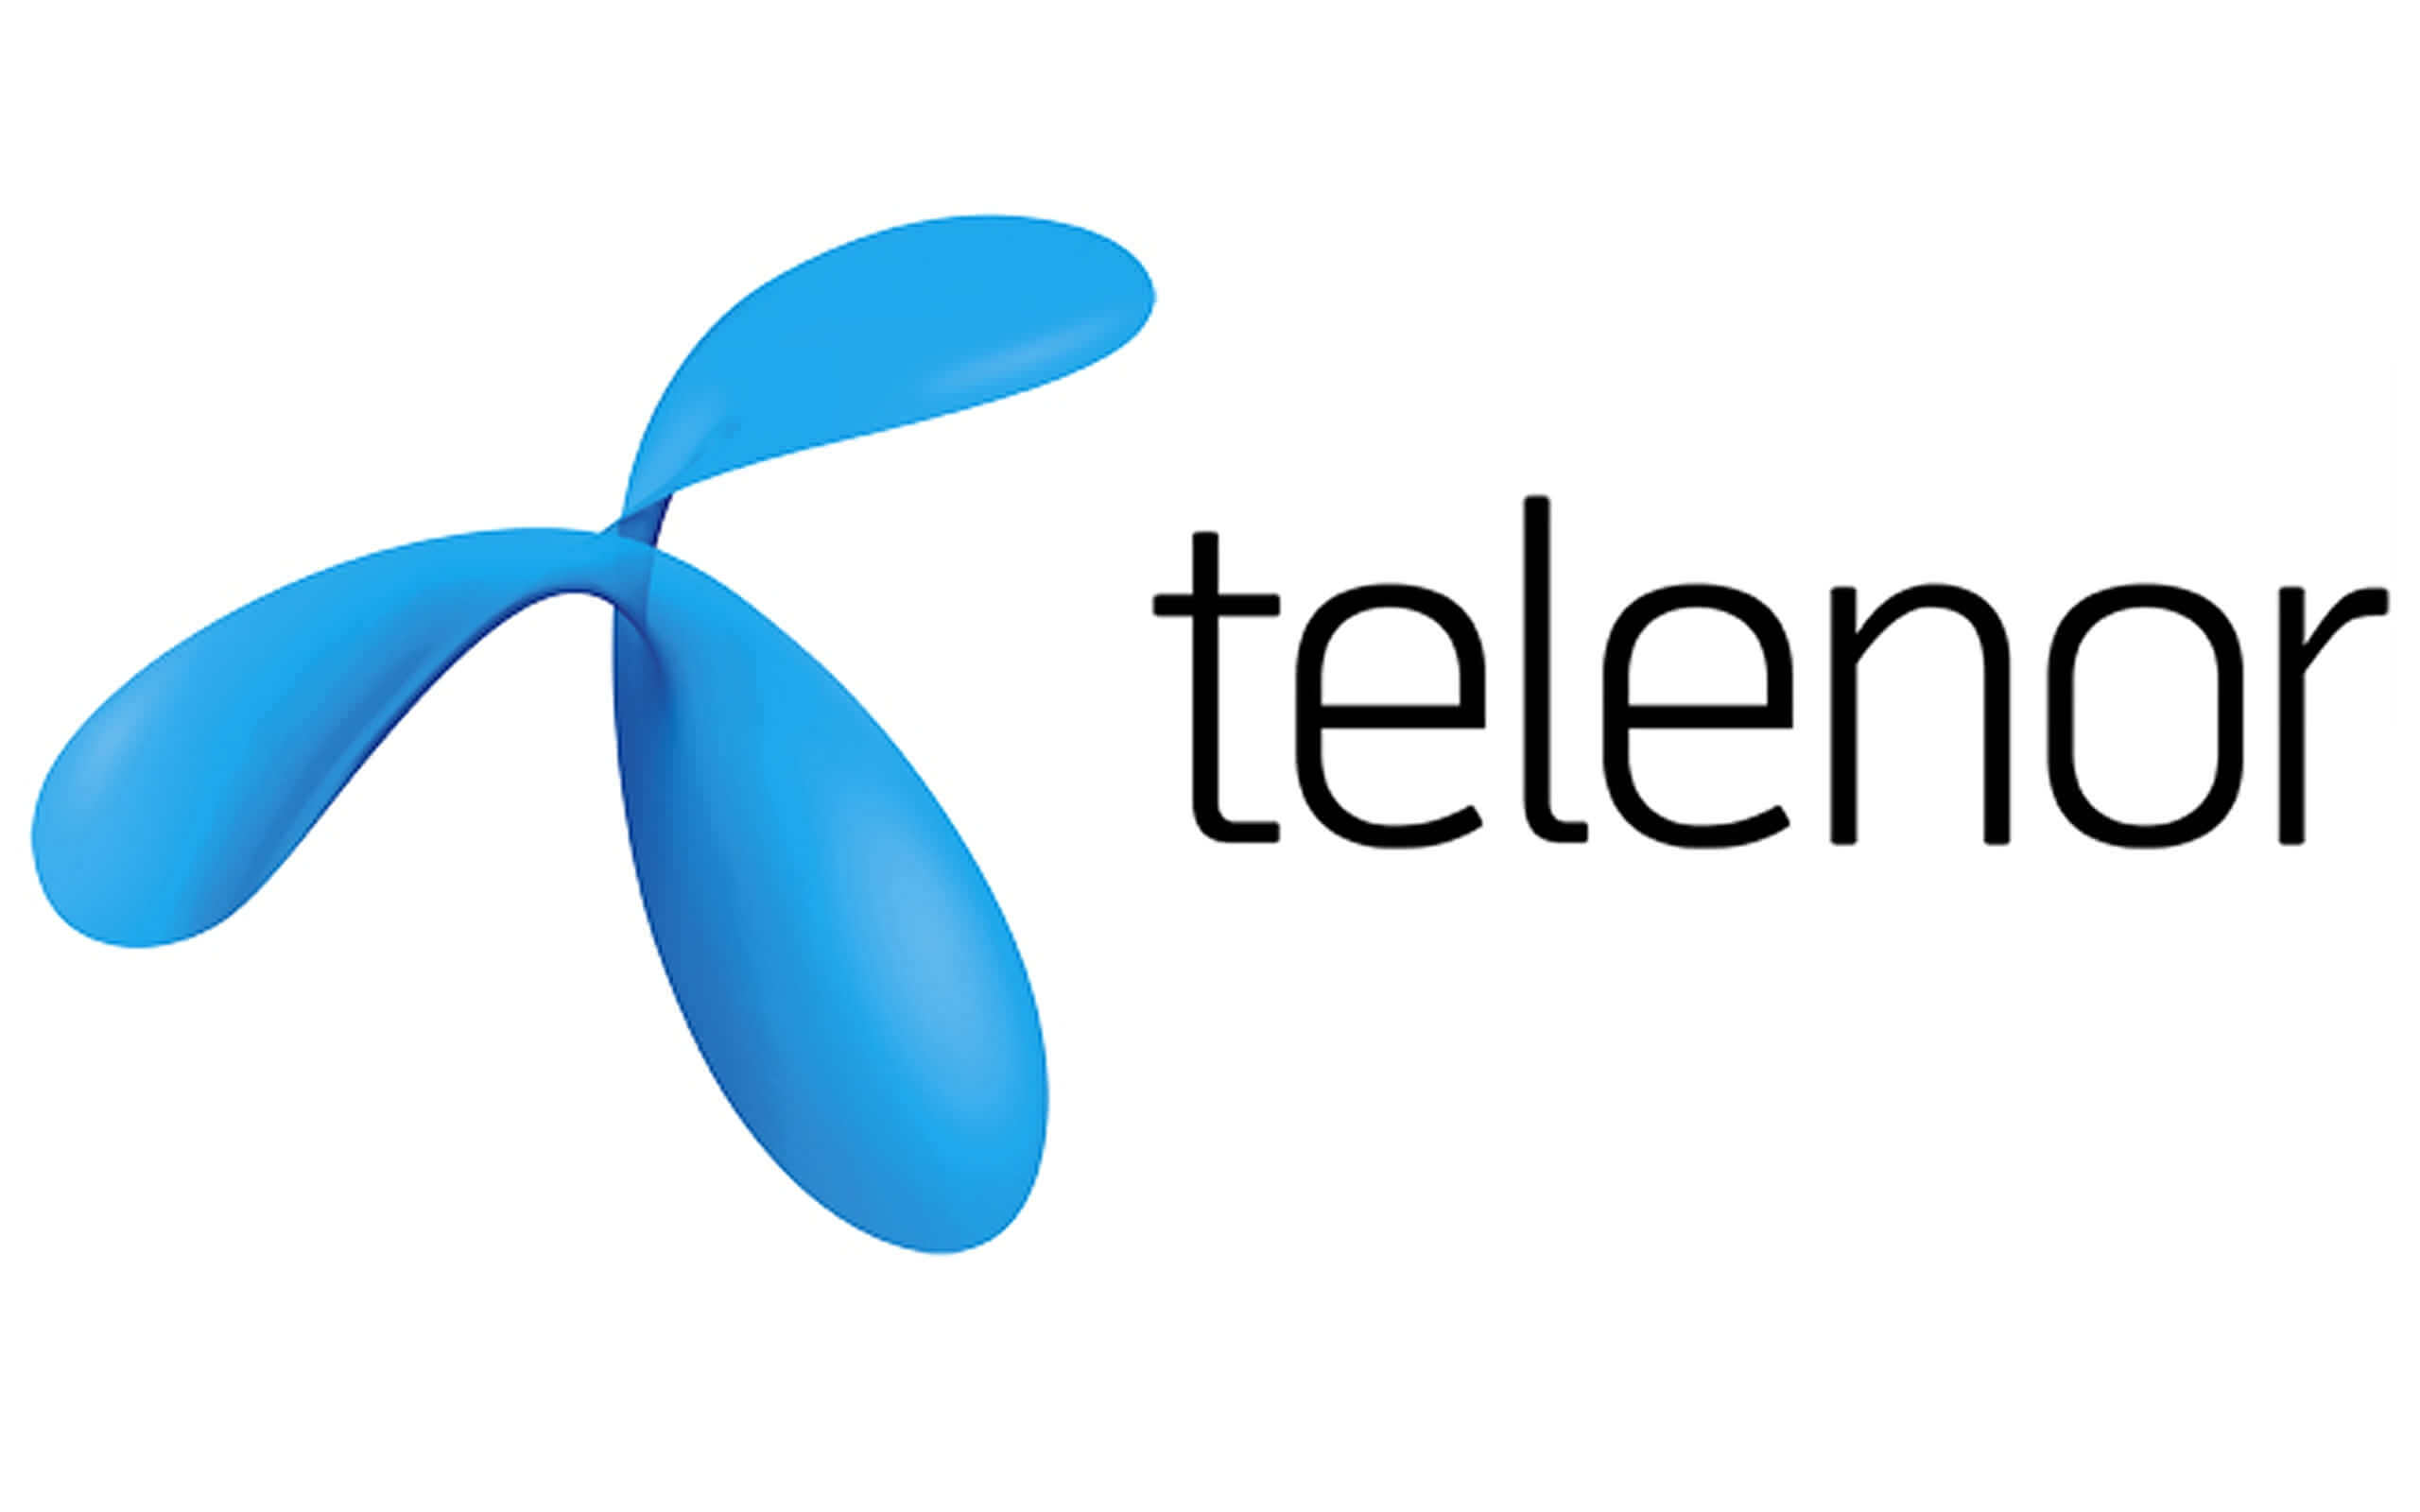 telenor-logo-wide